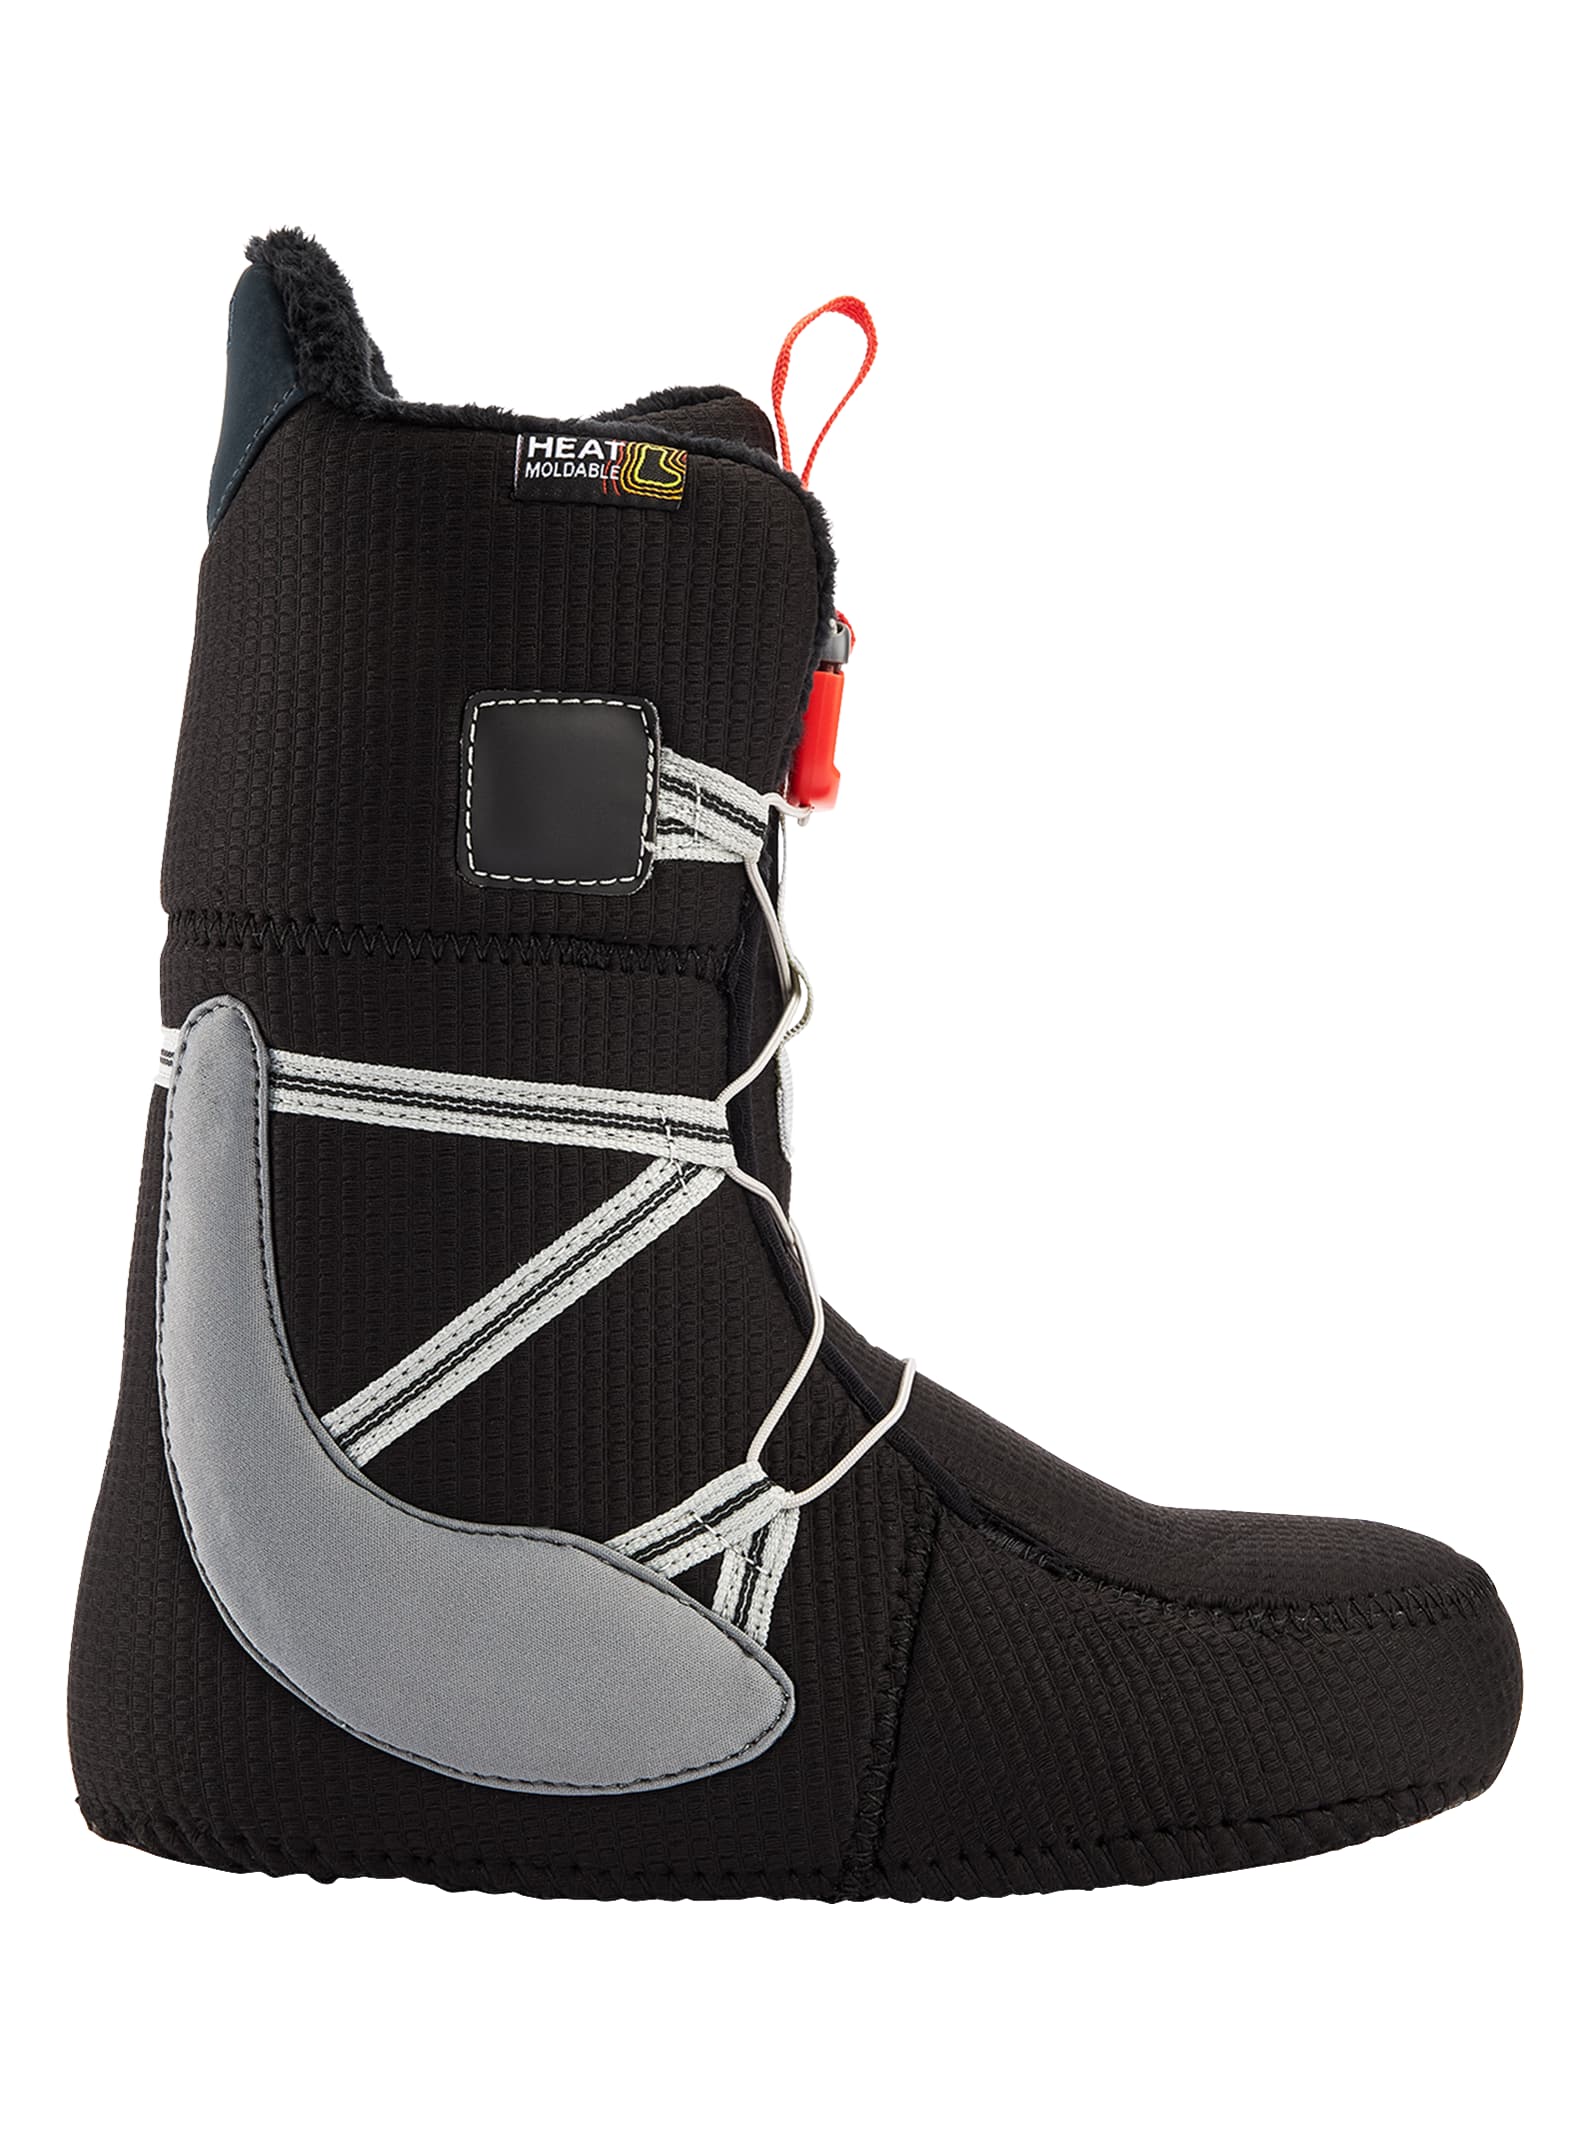 Women's Burton Mint BOA® Snowboard Boots | Burton.com Winter 2022 US